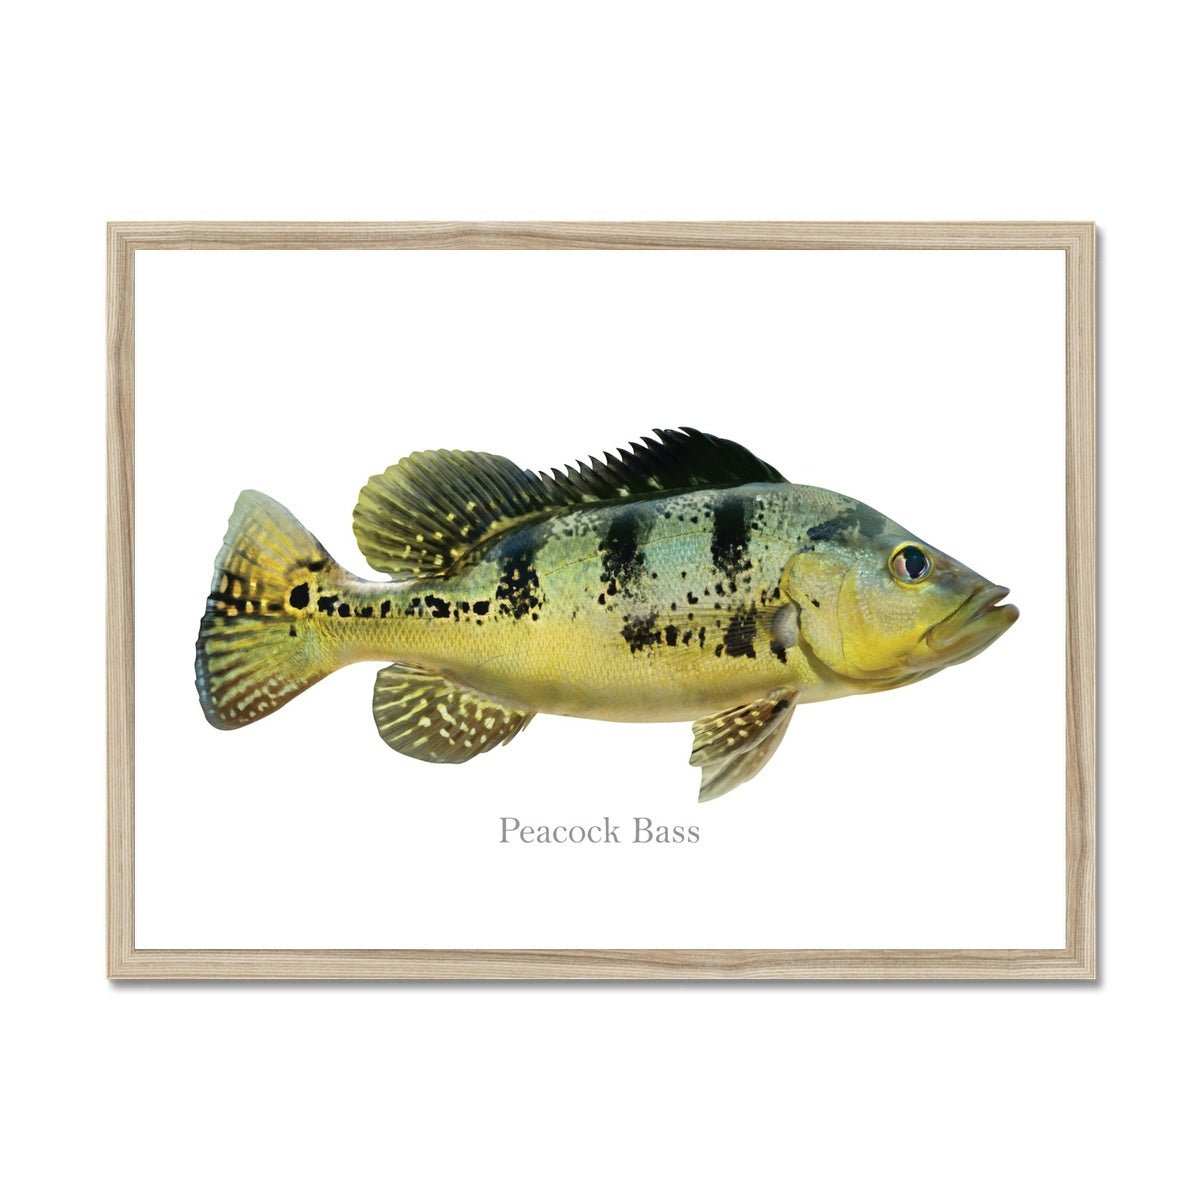 Peacock Bass - Framed Print - madfishlab.com